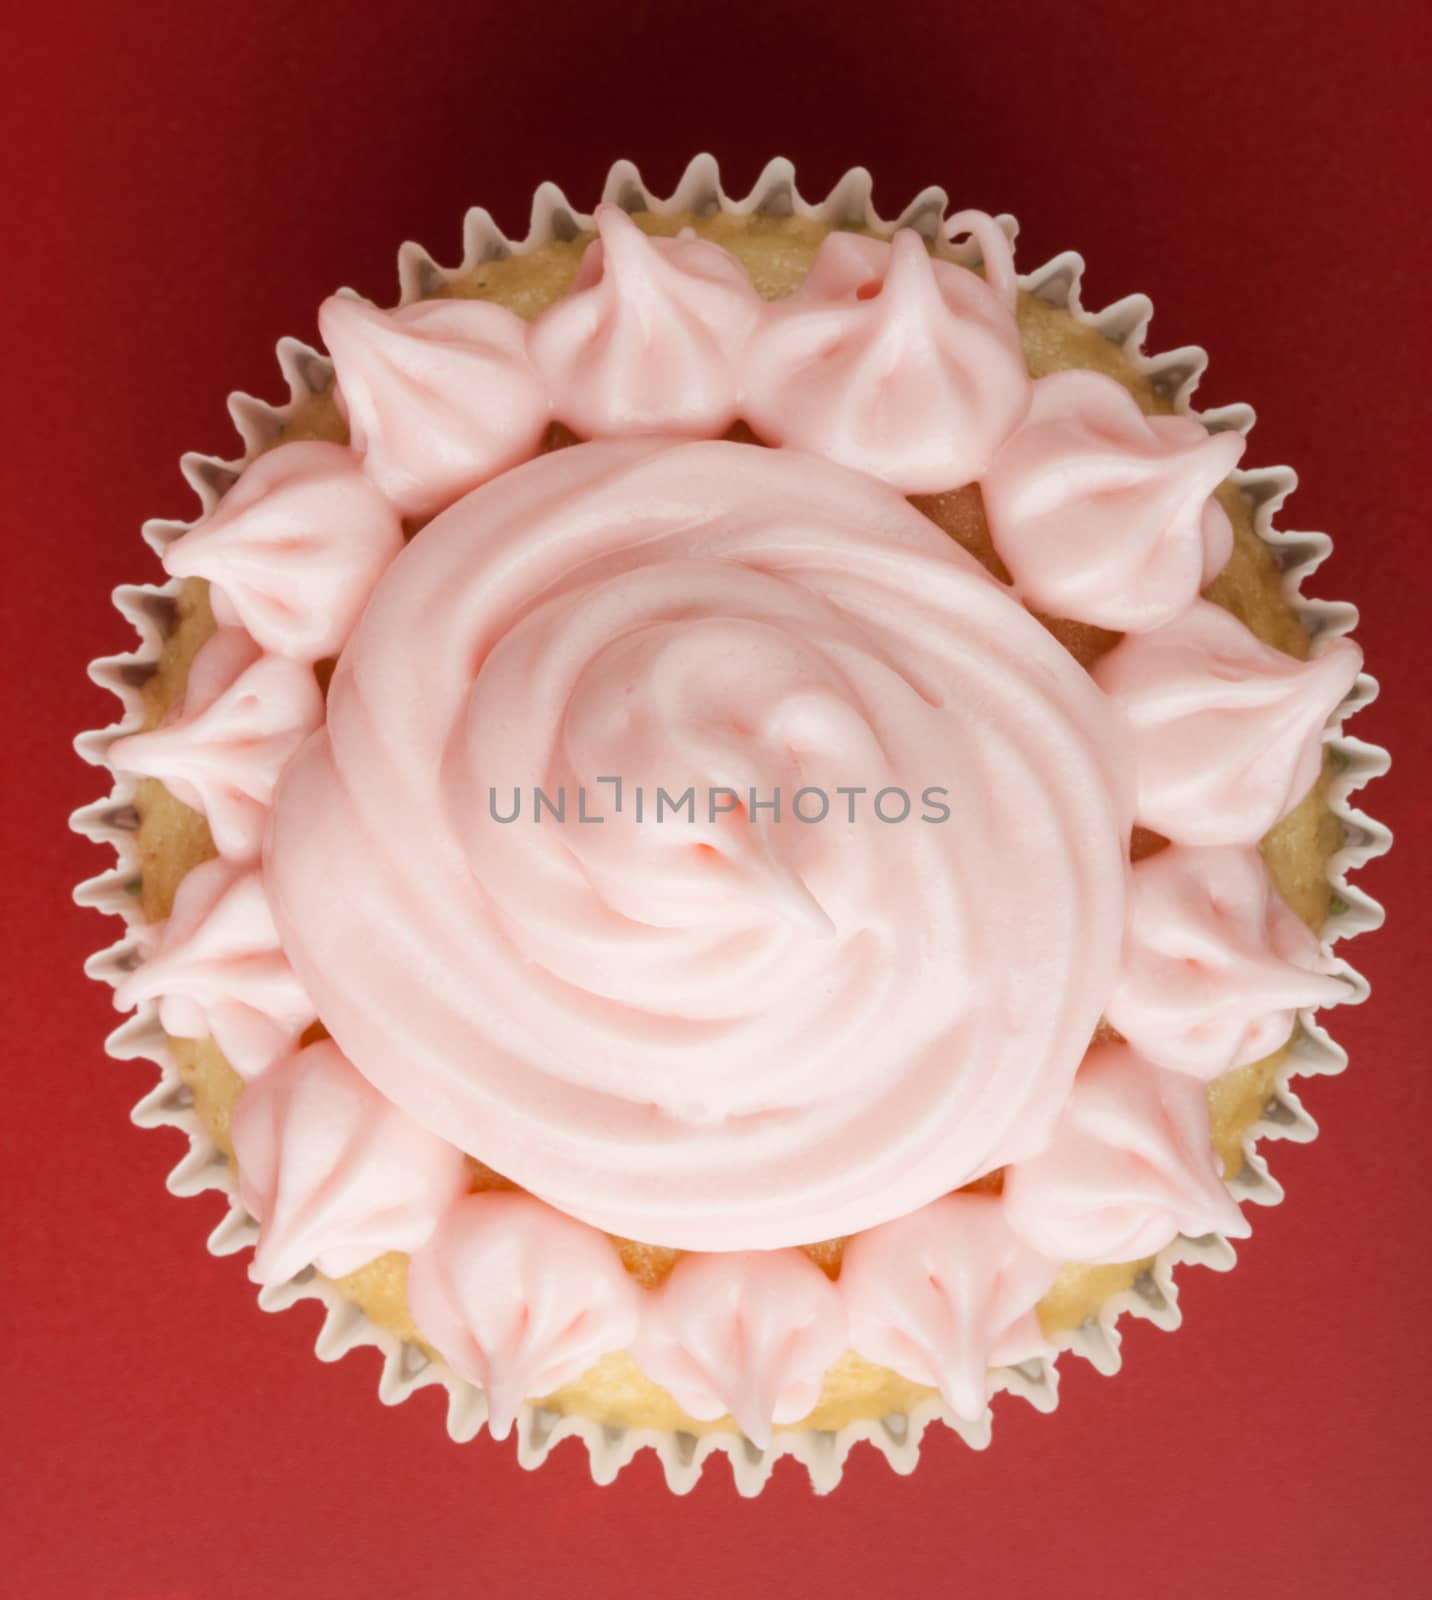 Cupcake by lanalanglois